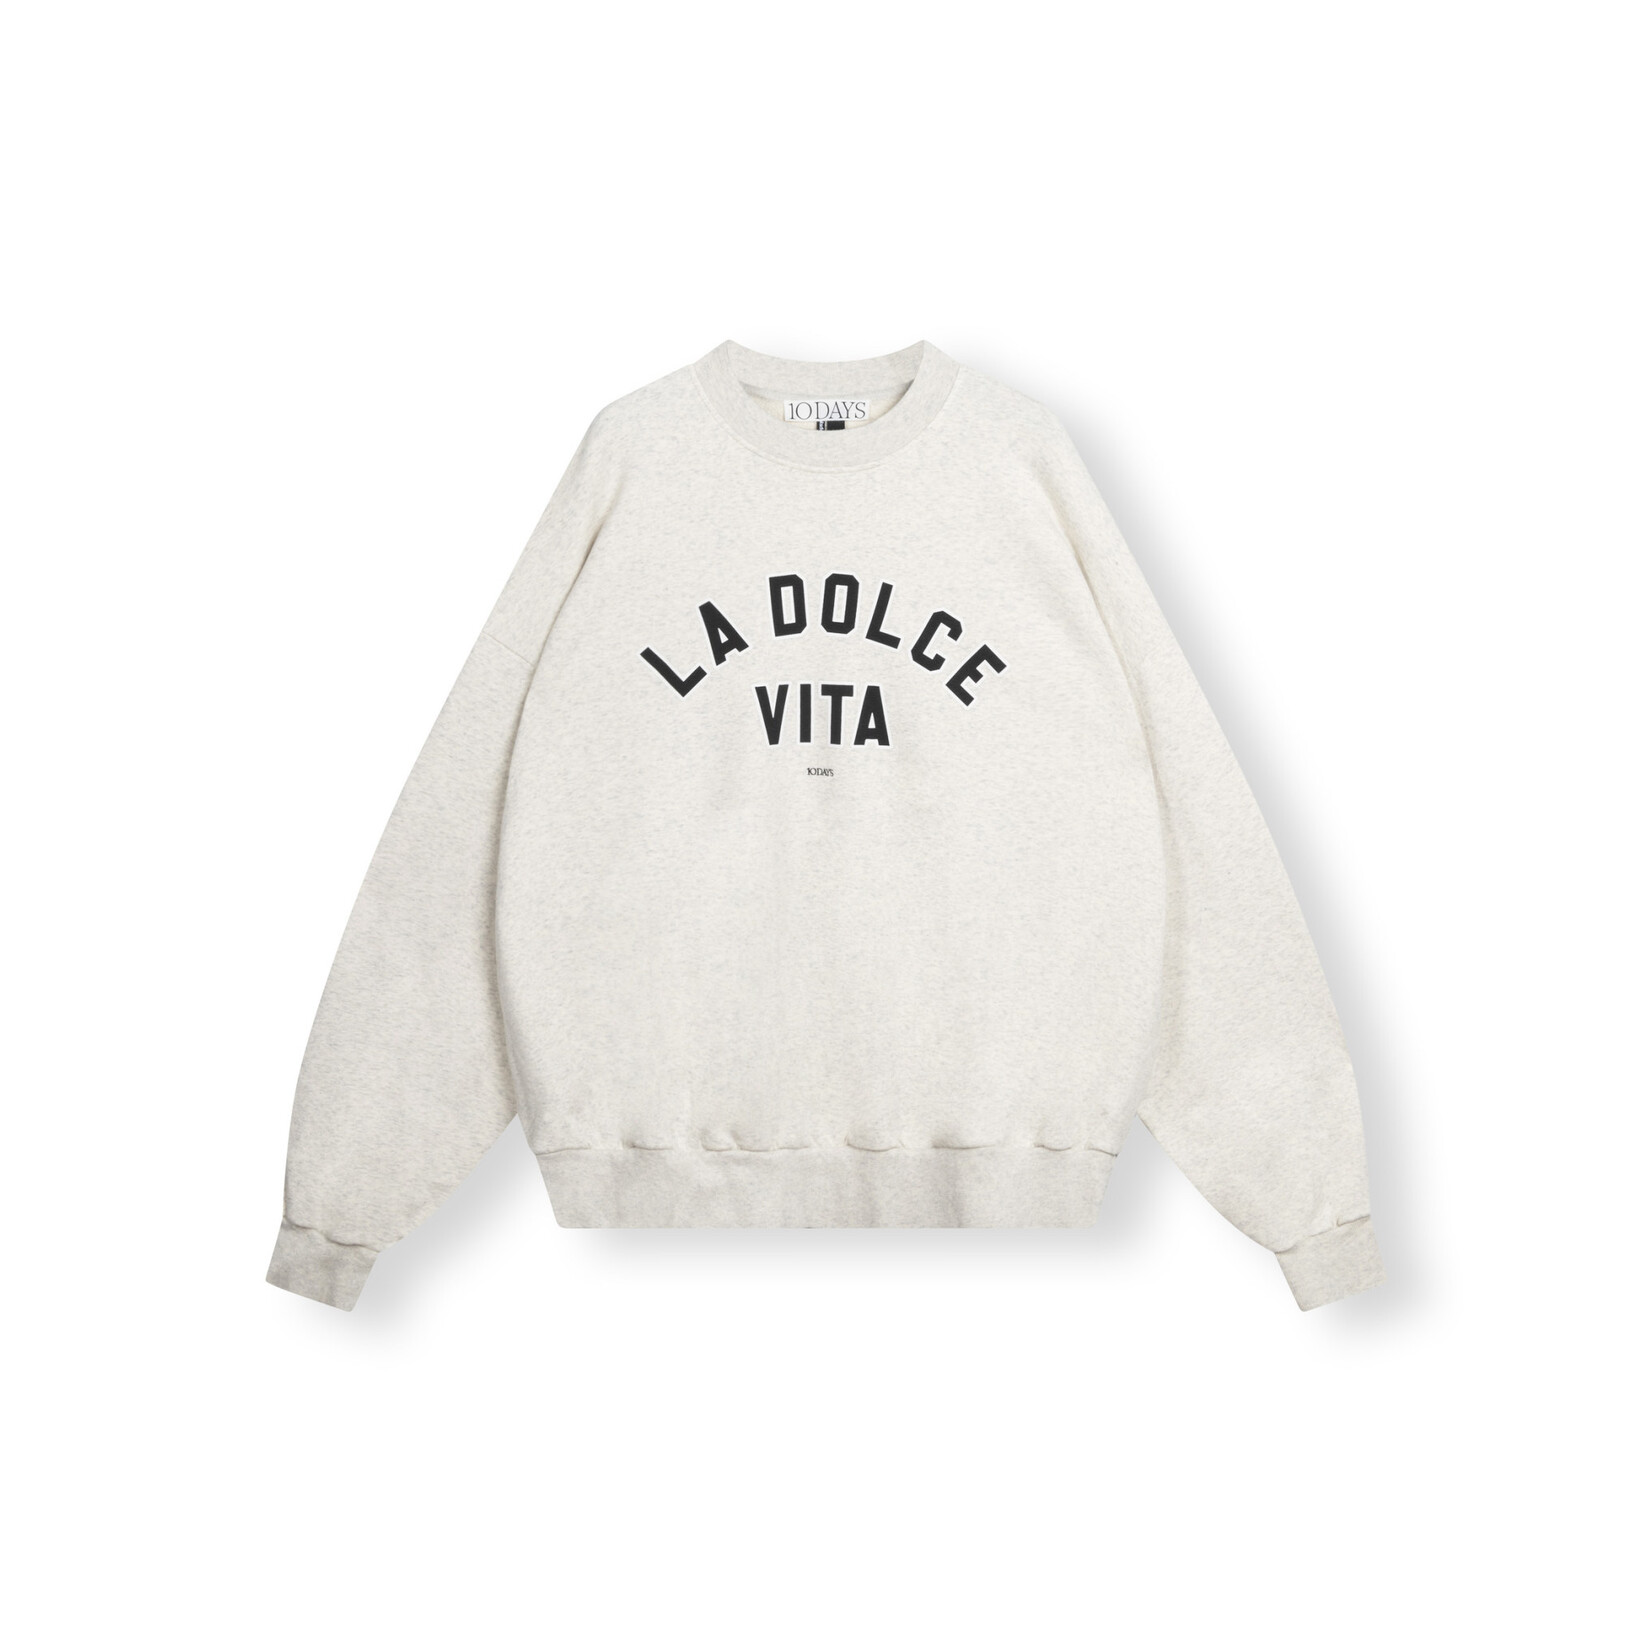 10Days Sweater la dolce vita Soft white melee